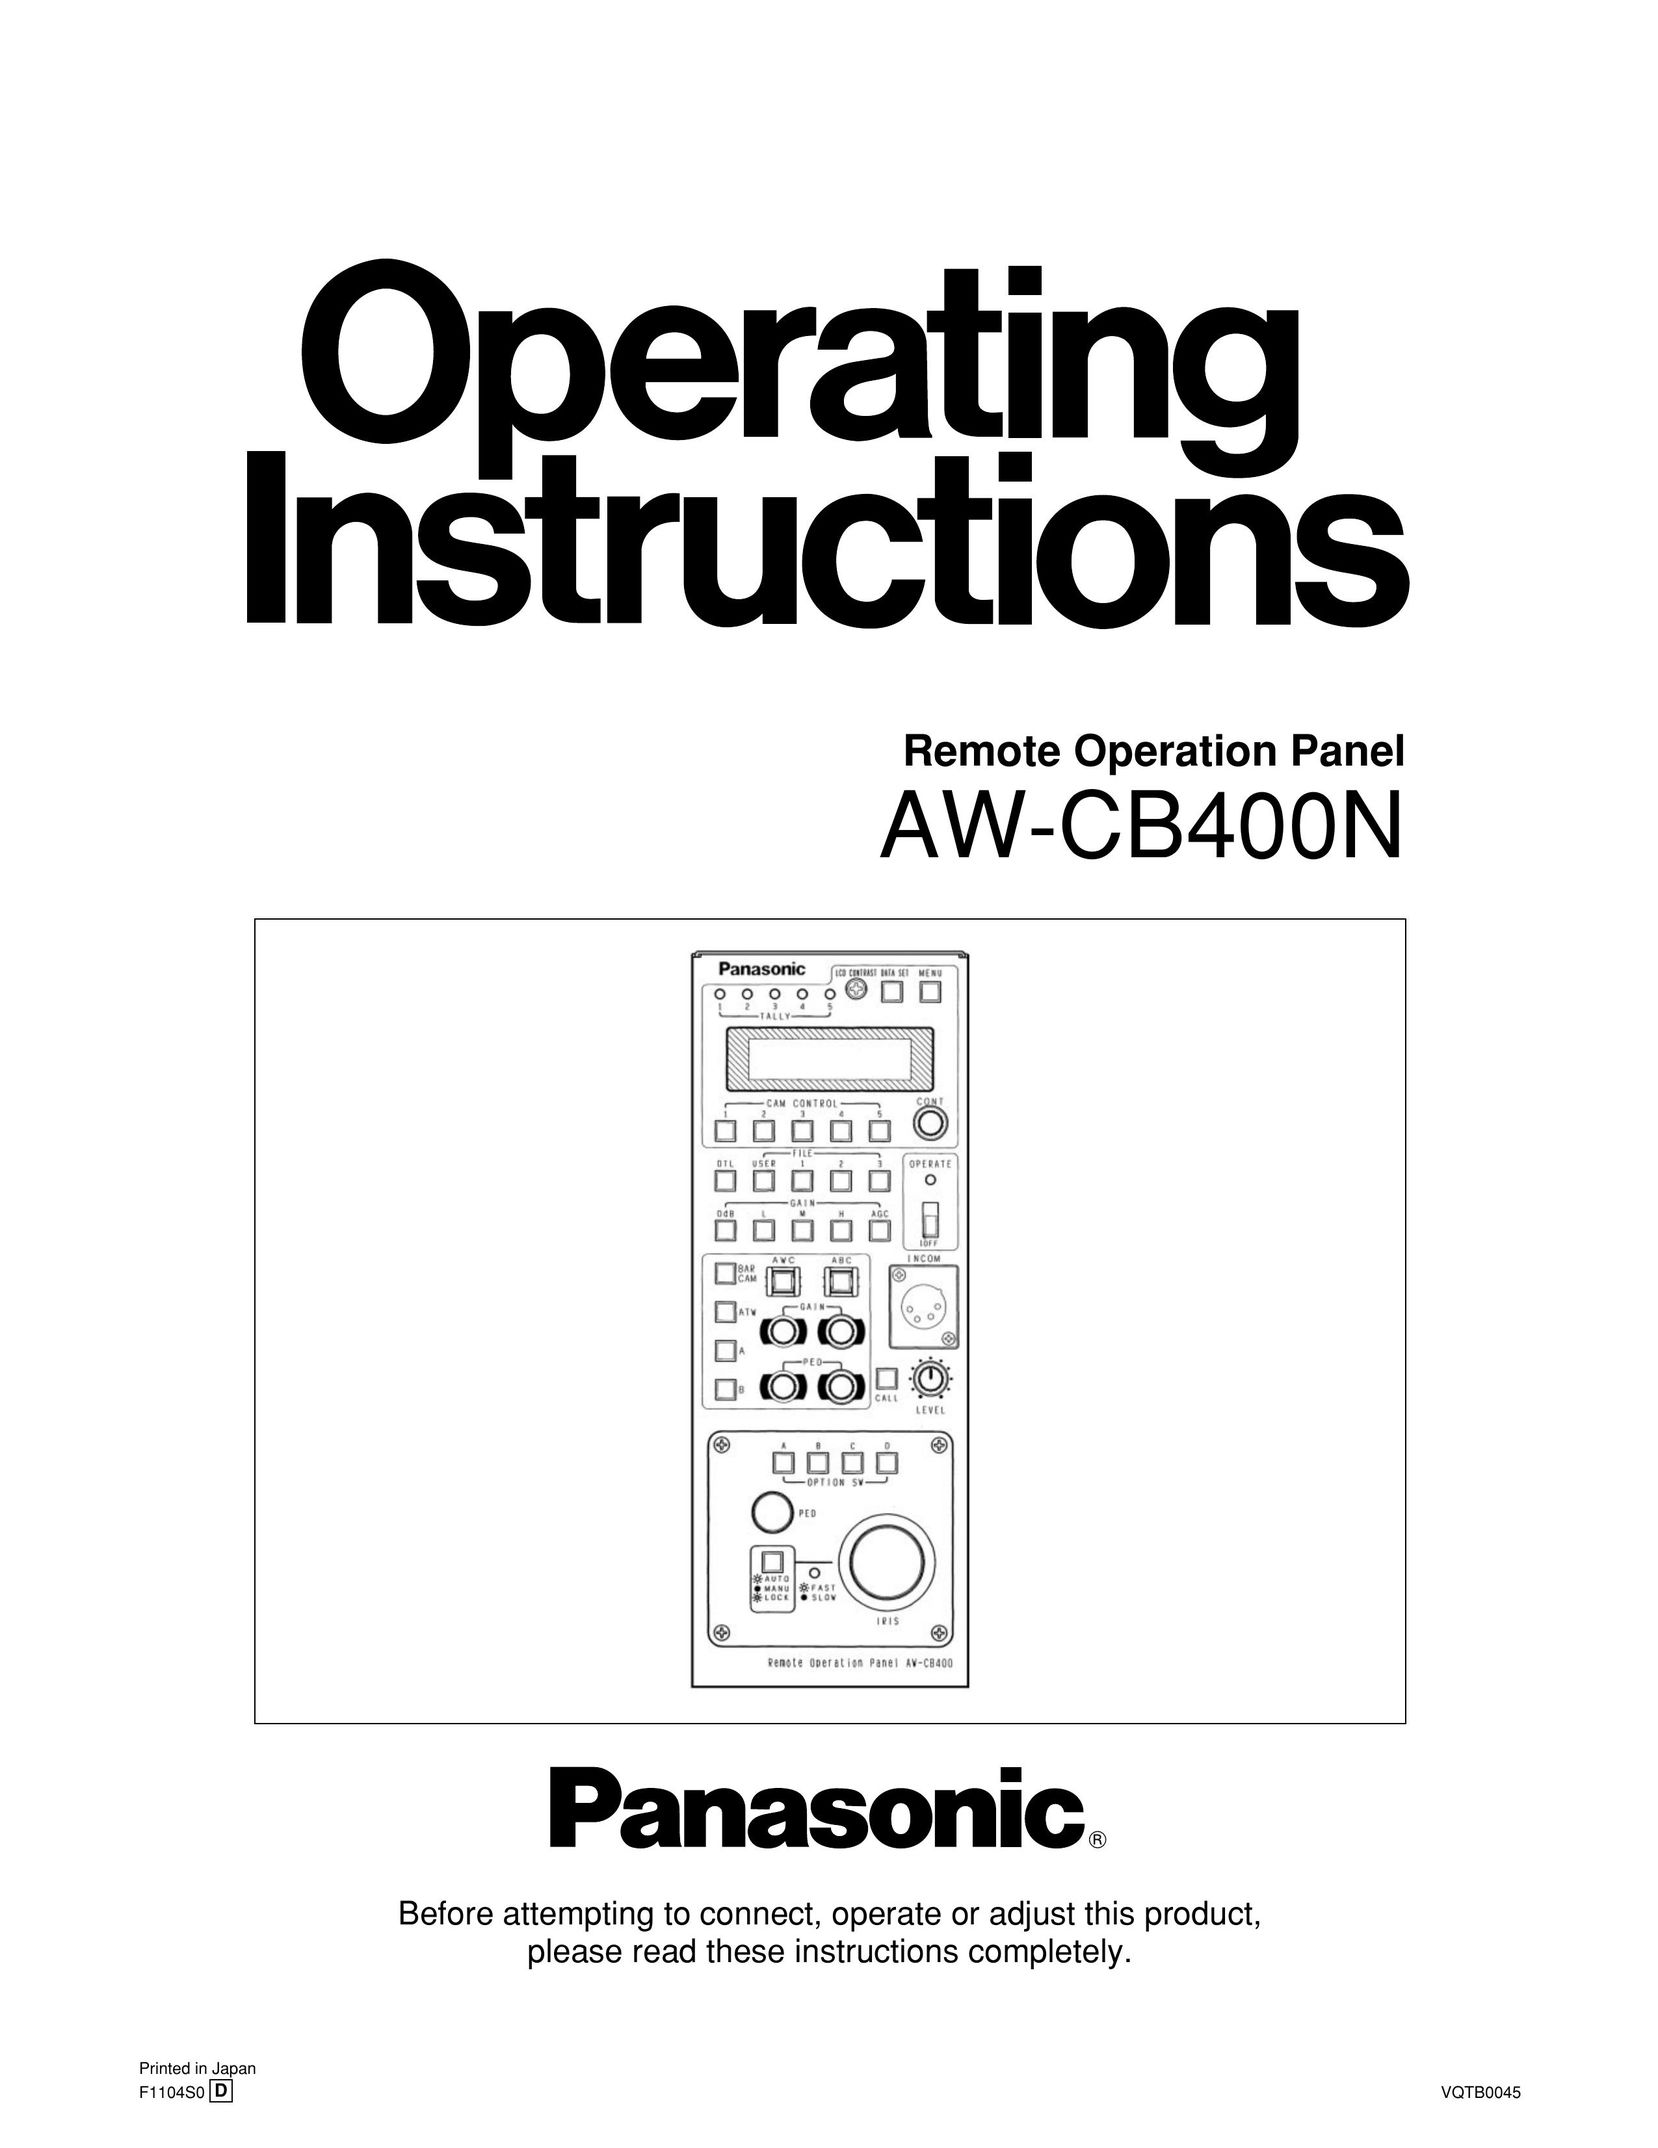 Panasonic AWCB400N Universal Remote User Manual